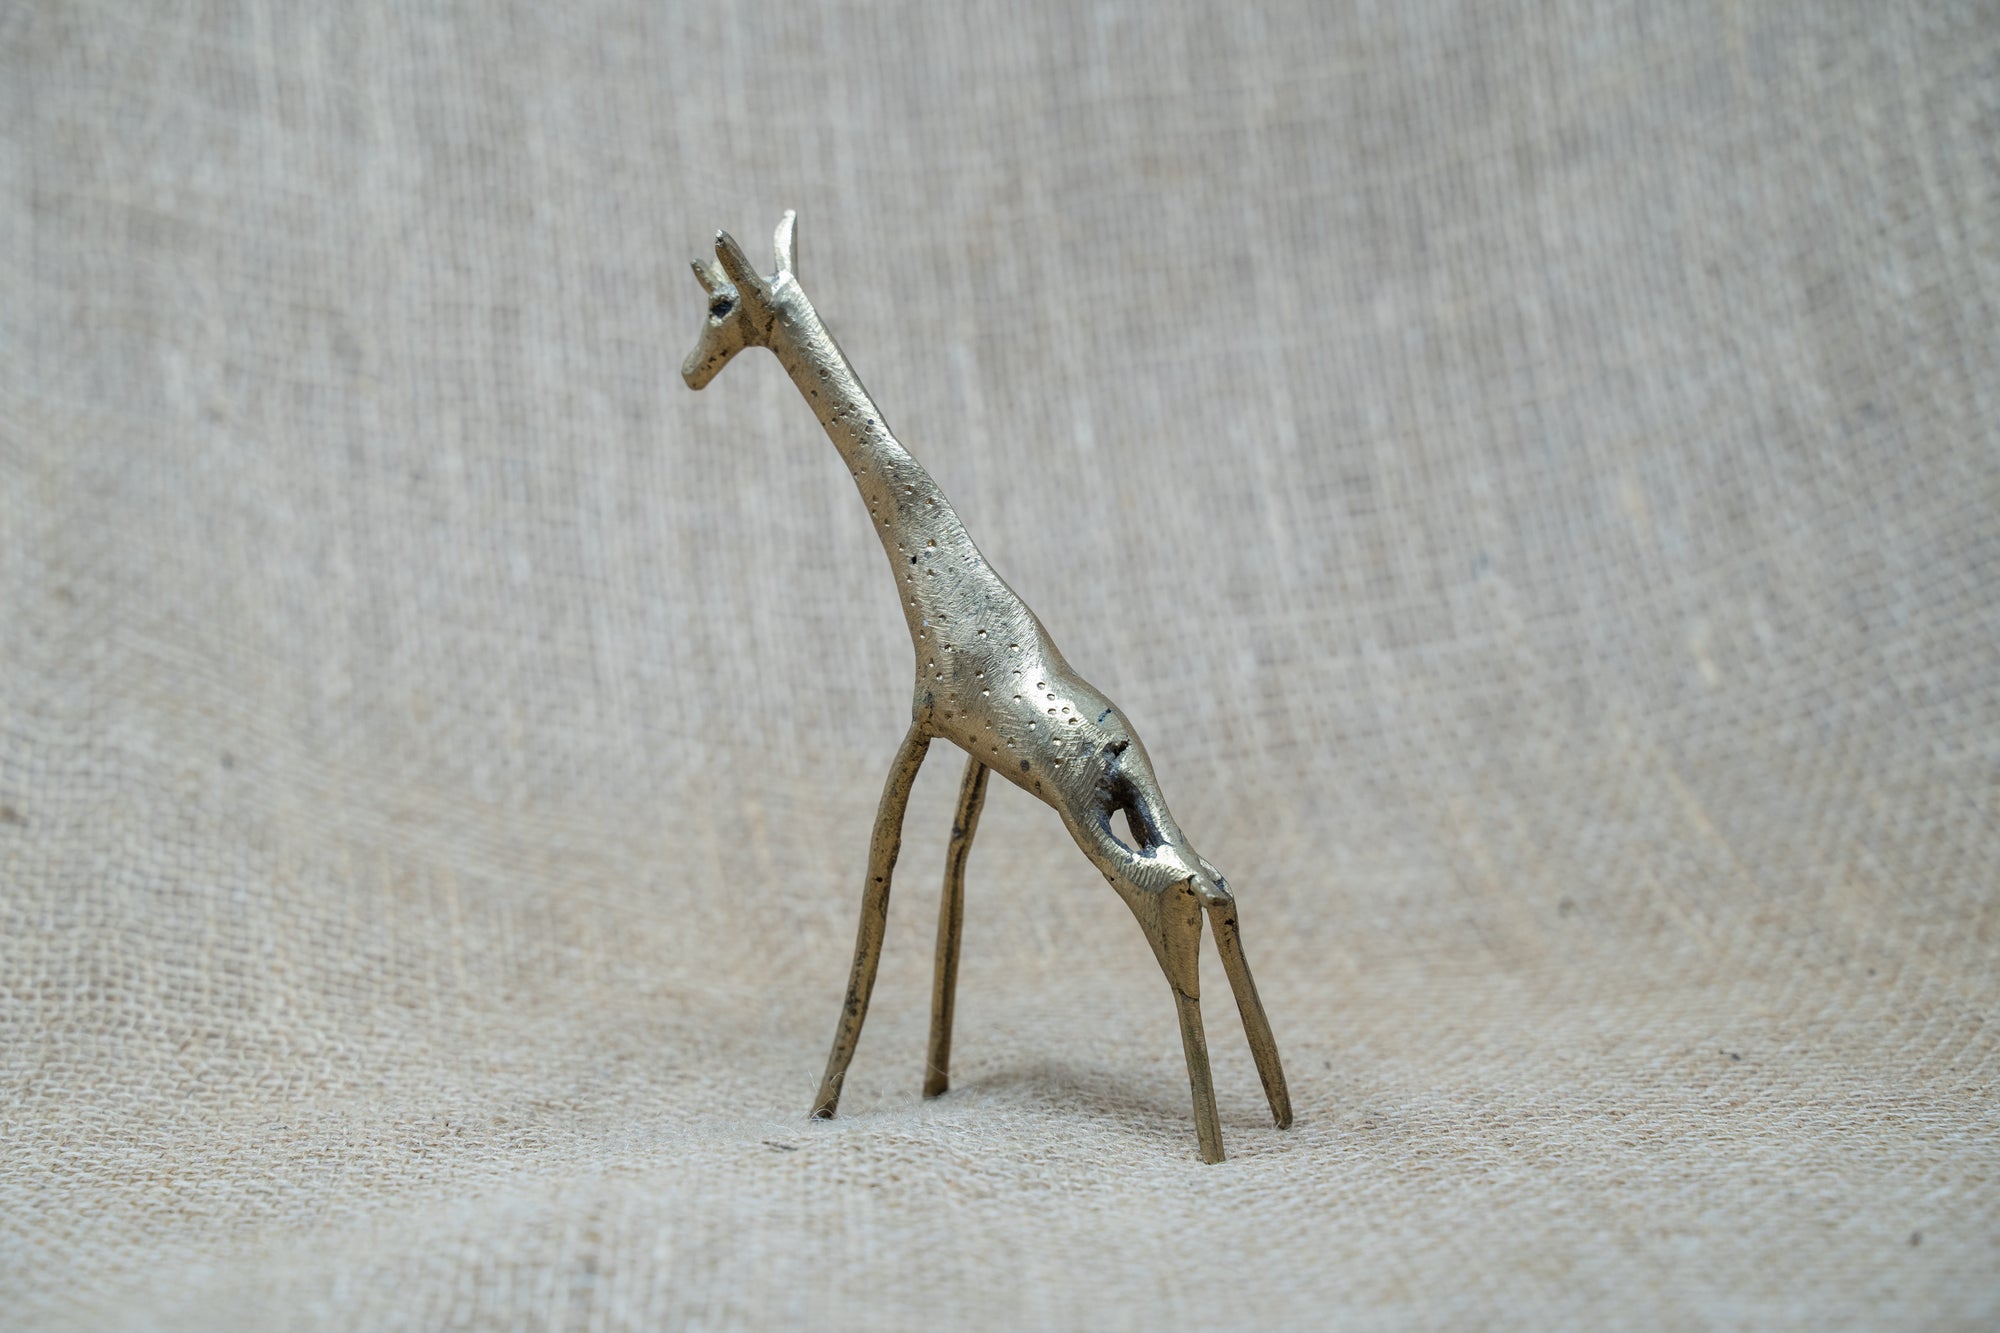 Tuareg Brass animals - Giraffe 43.2